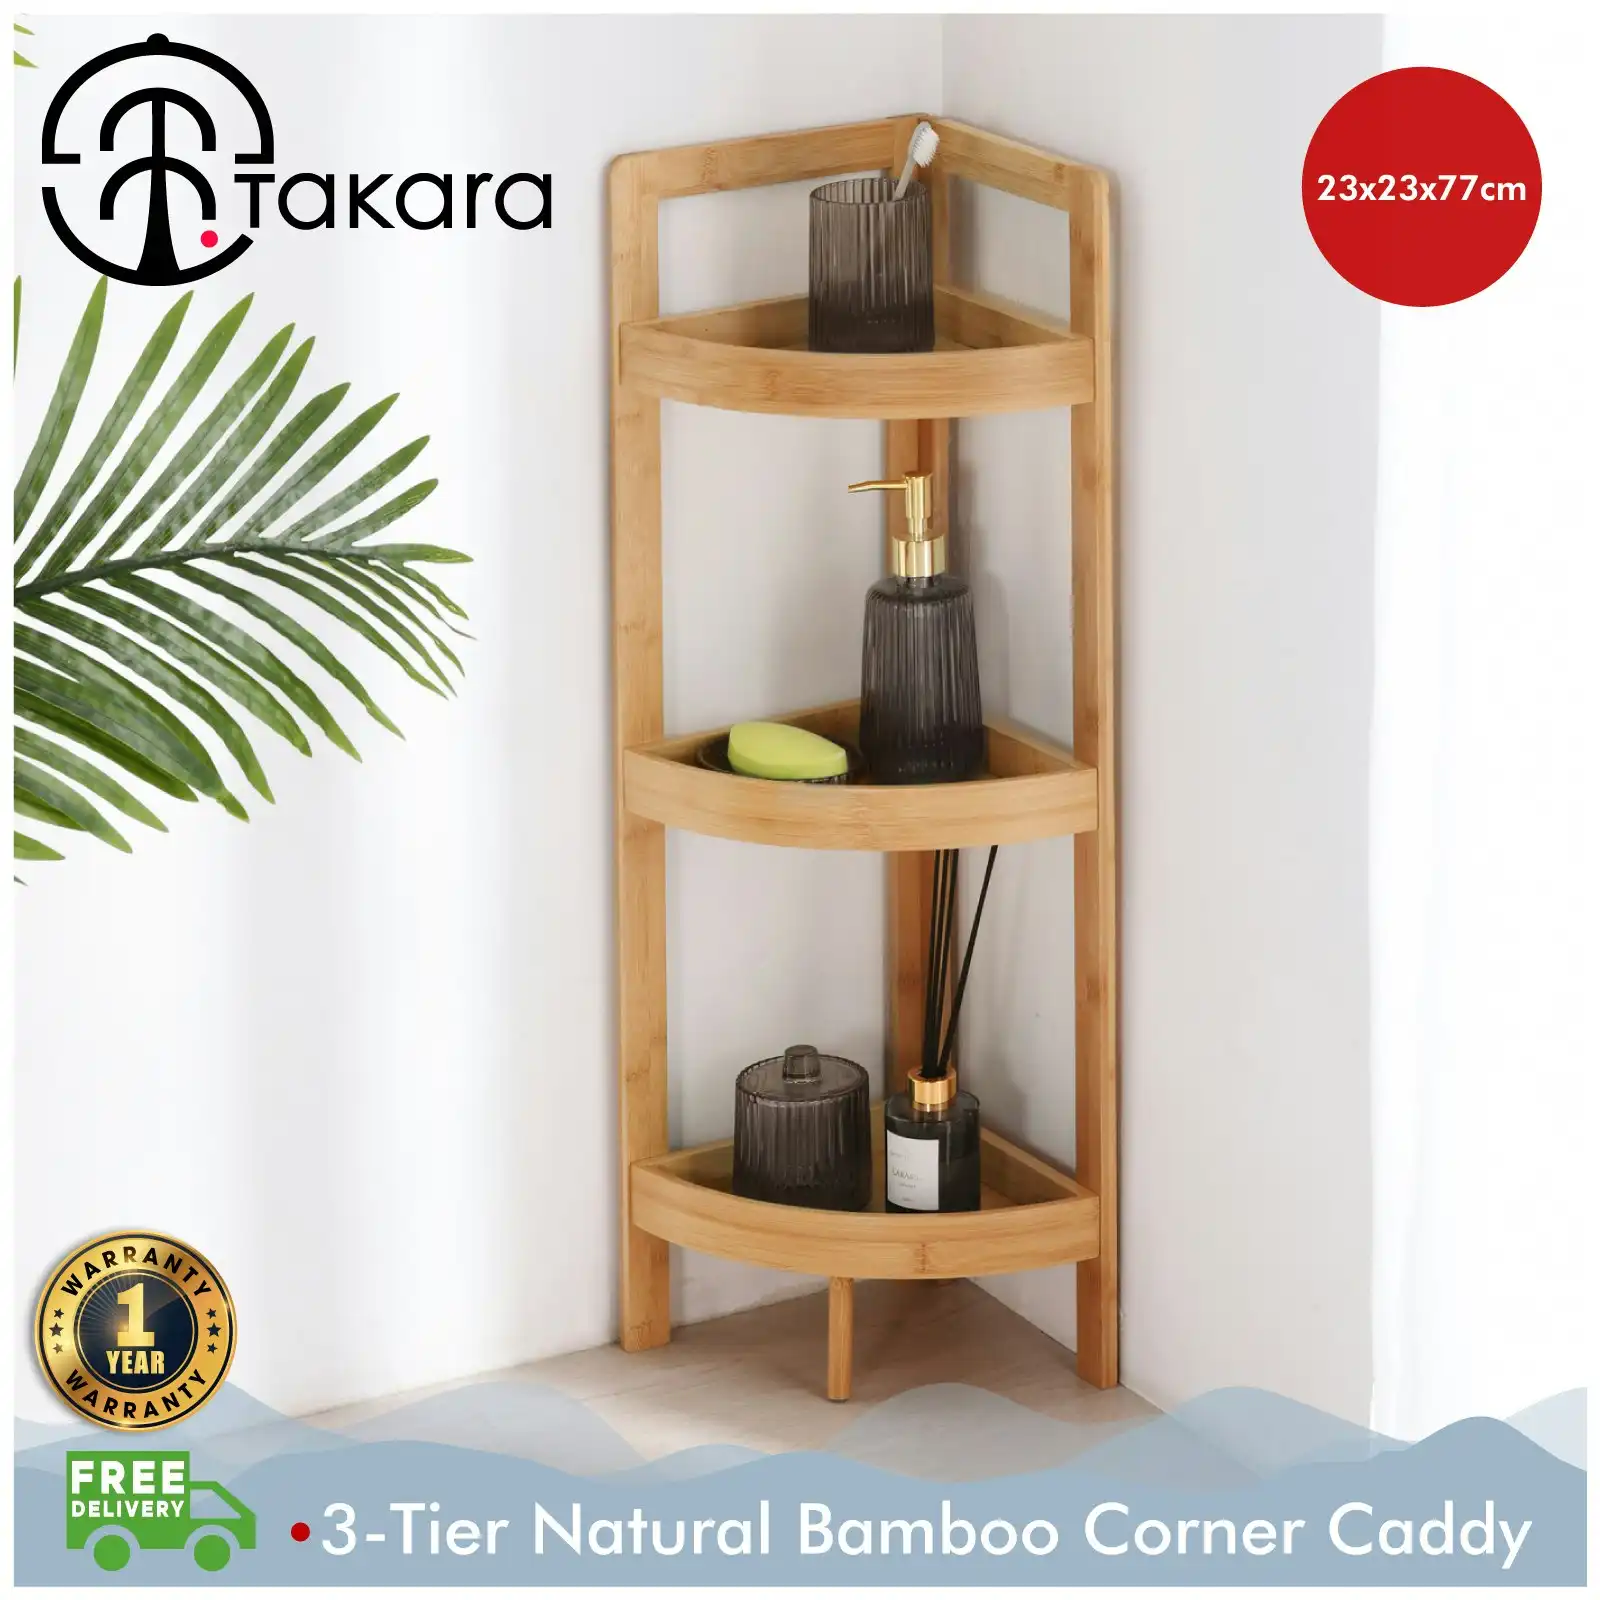 Takara Okin 3-Tier Natural Bamboo Corner Caddy Natural Colour 23x23x77cm